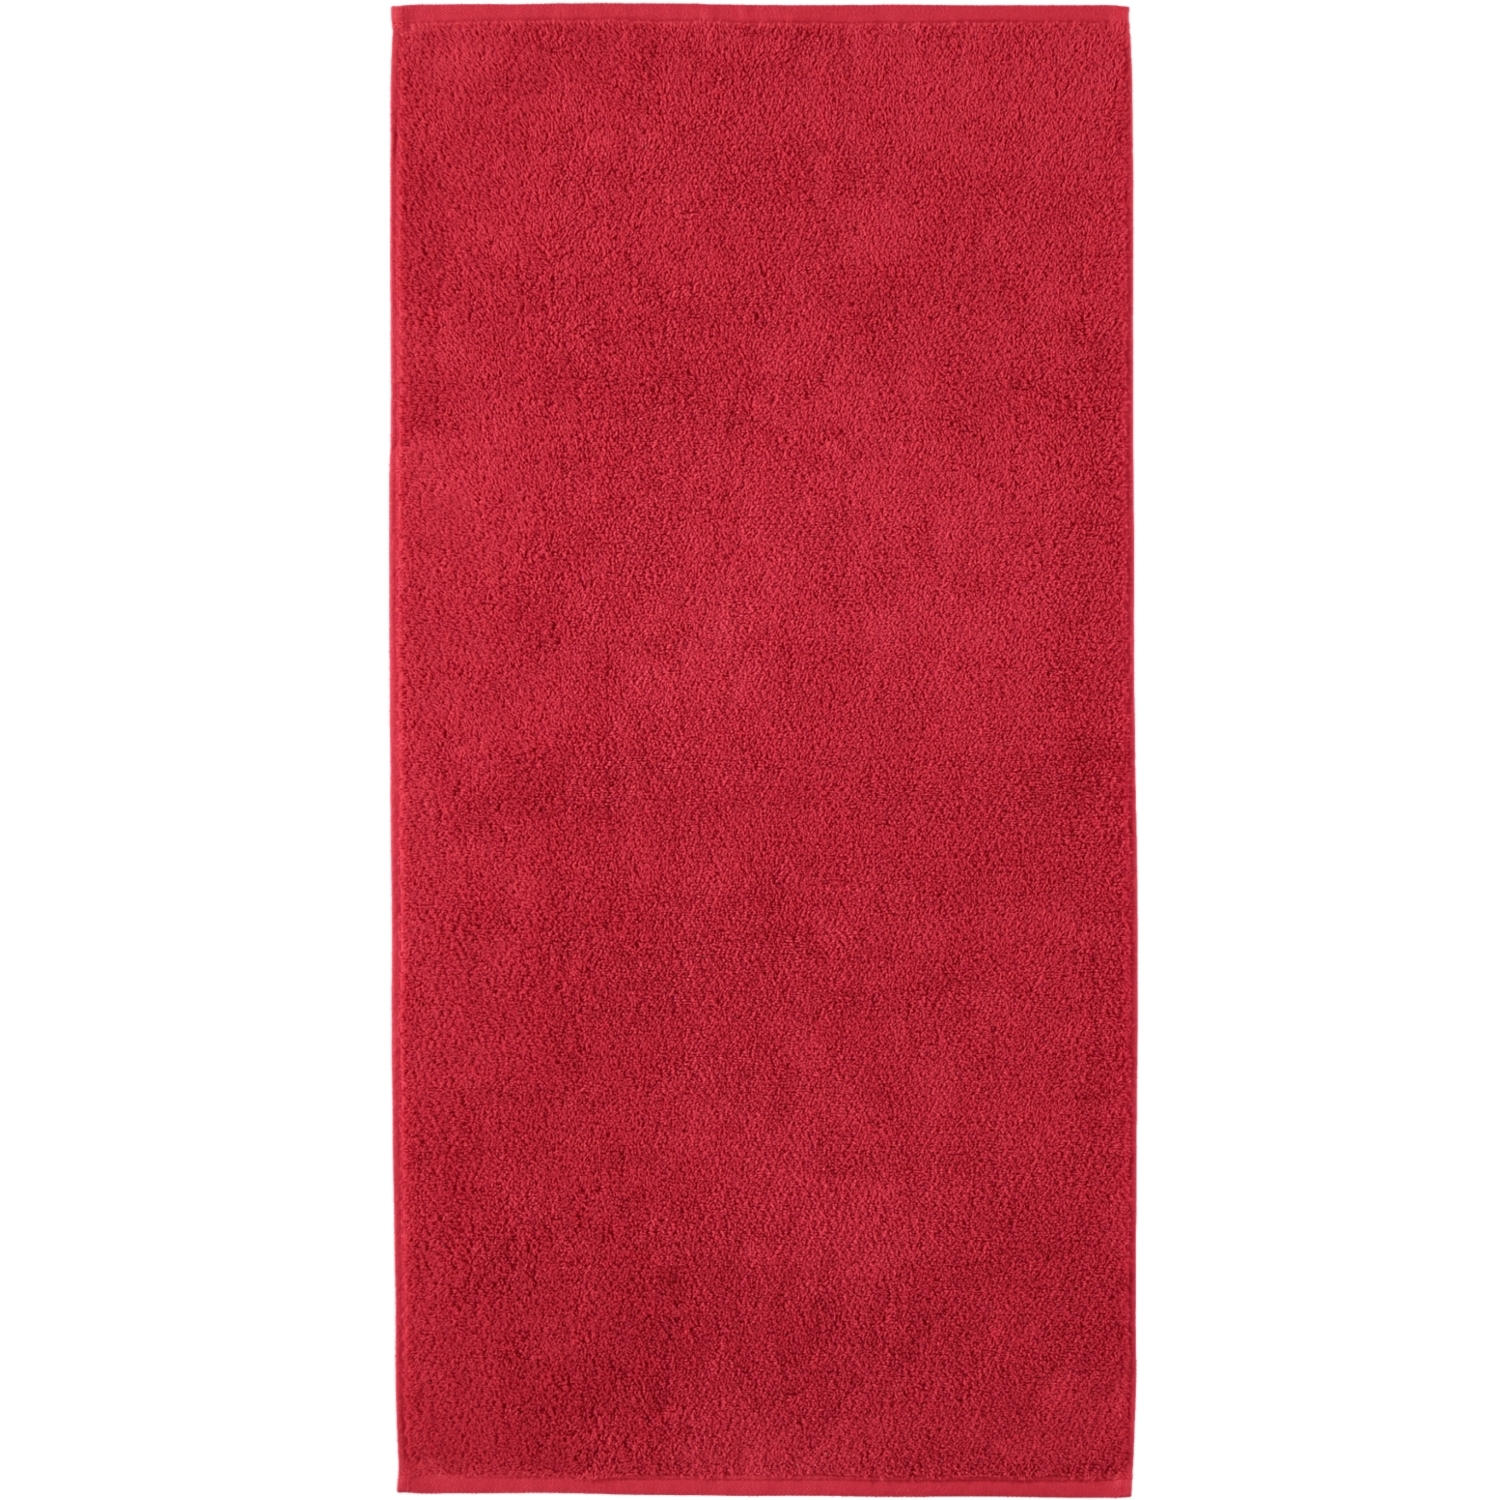 HANDTUCH Heritage  - Rot, Basics, Textil (50/100cm) - Cawoe